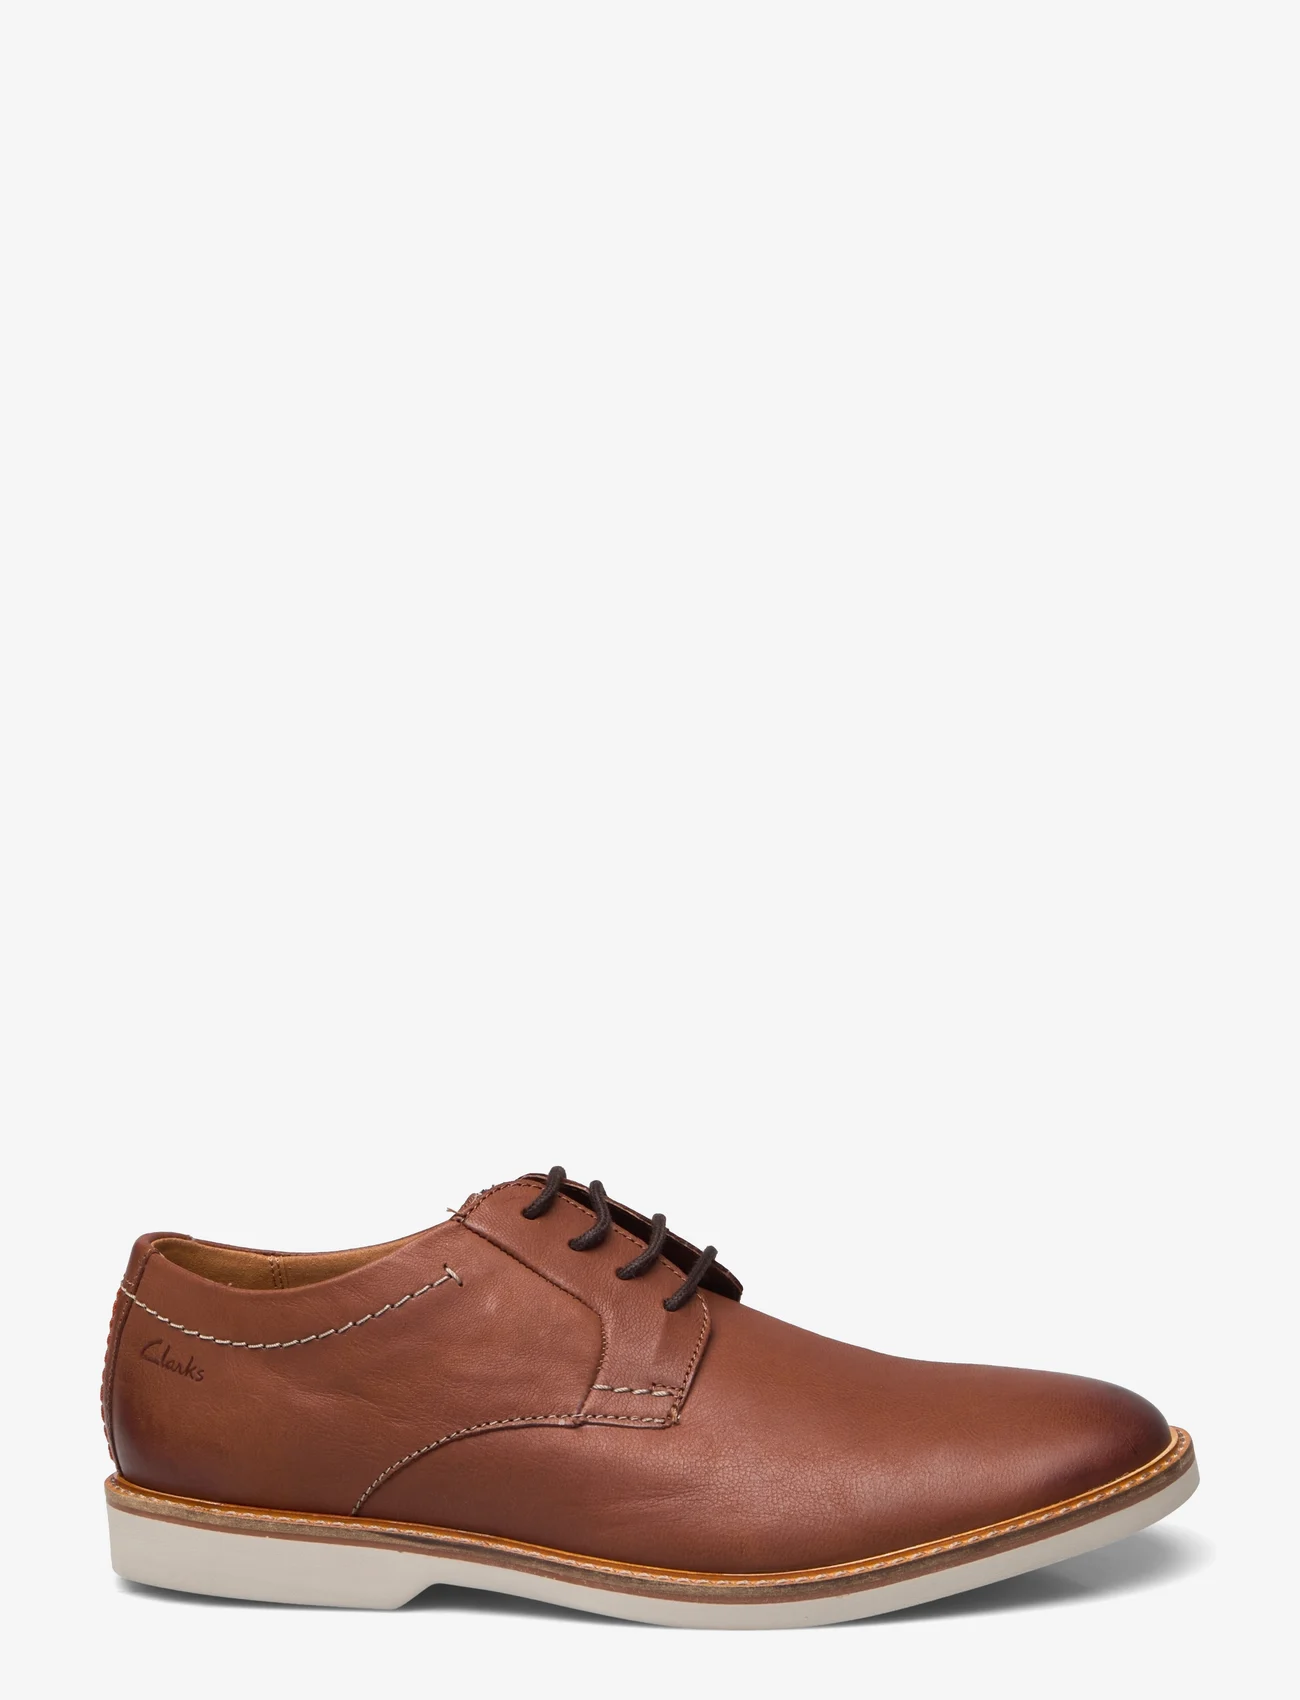 Clarks - Atticus LTLace G - laced shoes - 5234 dark tan lea - 1